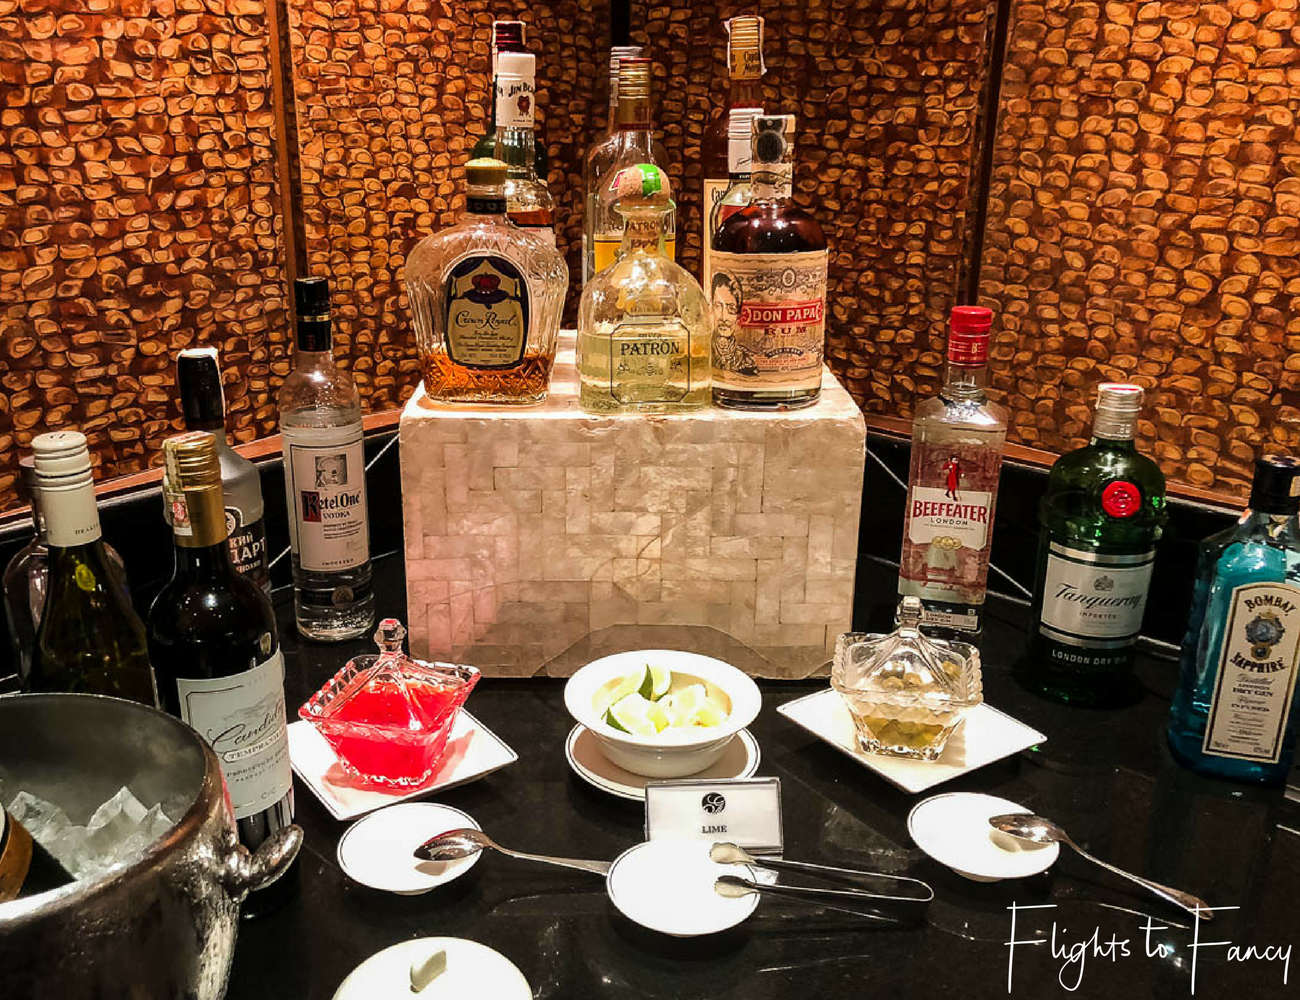 Flights to Fancy - Fairmont Makati Gold Lounge Spirits Bar